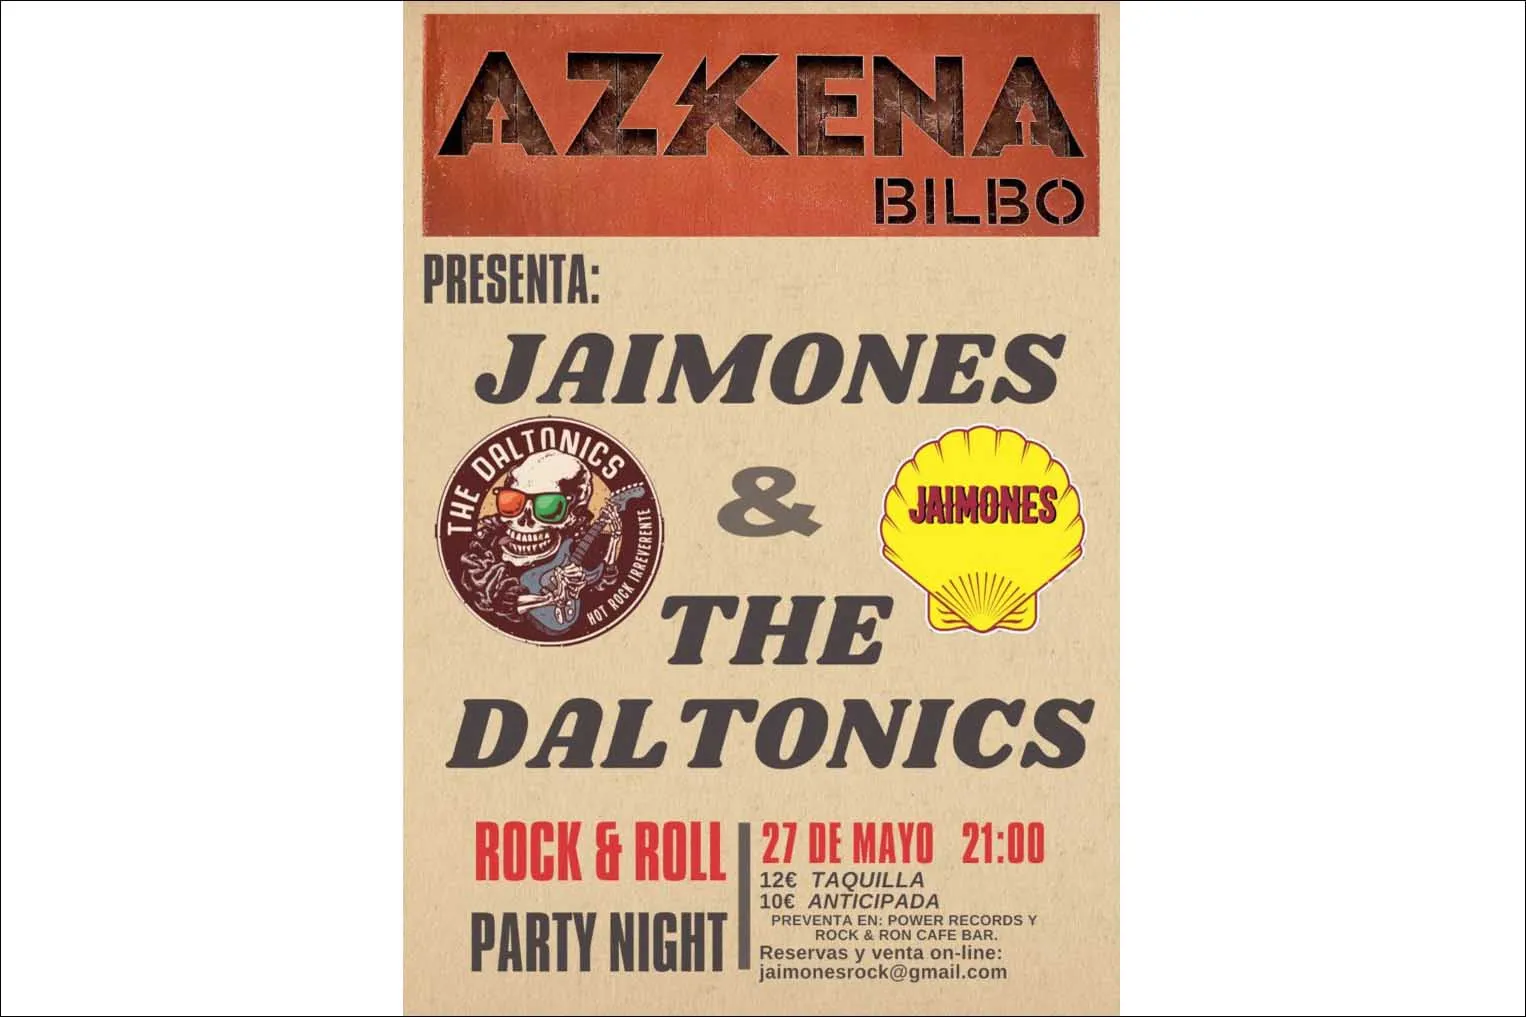 Rock & Roll party night: Jaimones + The Daltonics